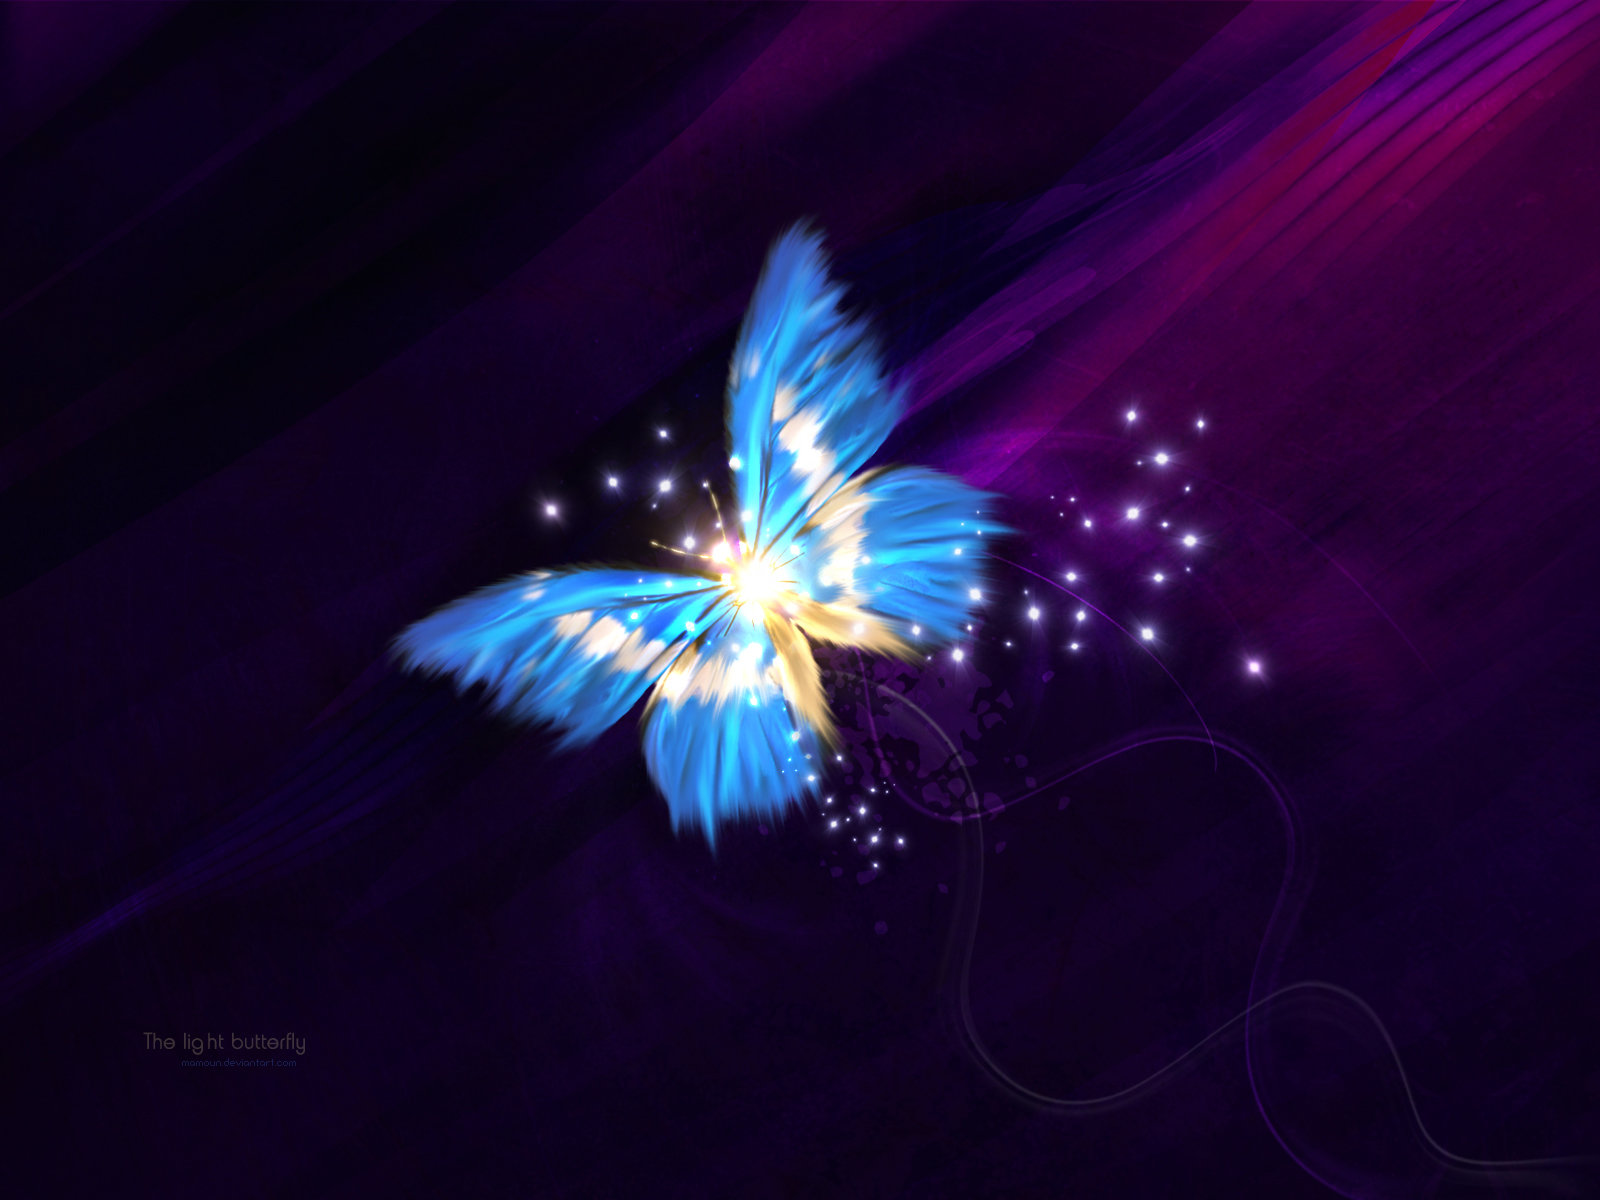 The light butterfly by mamoun on DeviantArt